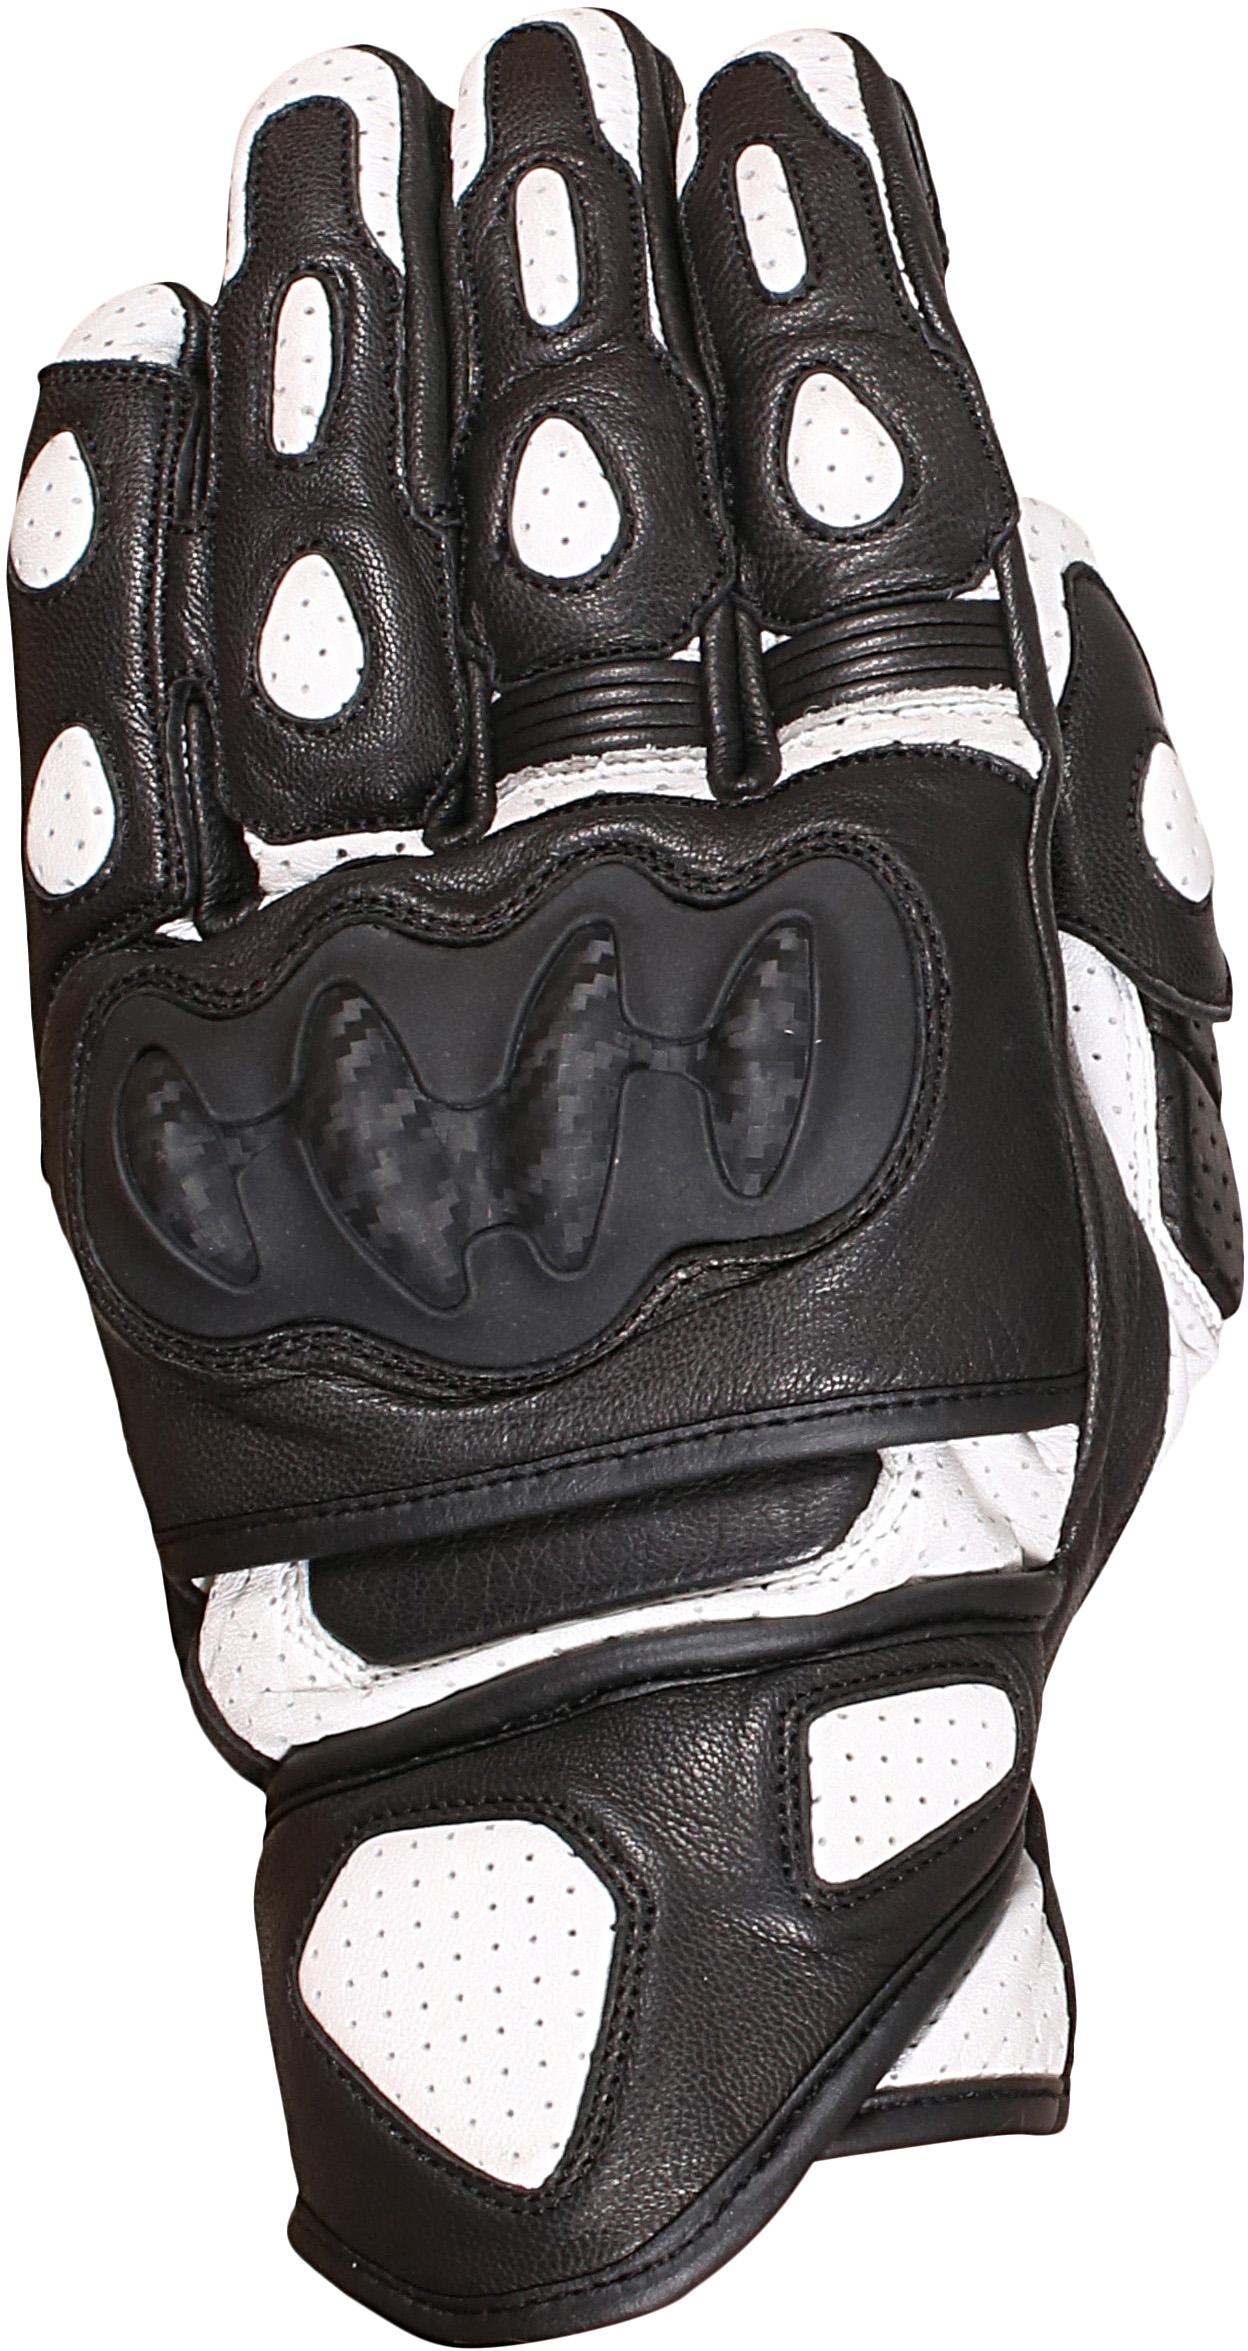 Weise Apex Motorcycle Gloves - Black/White, 2Xl